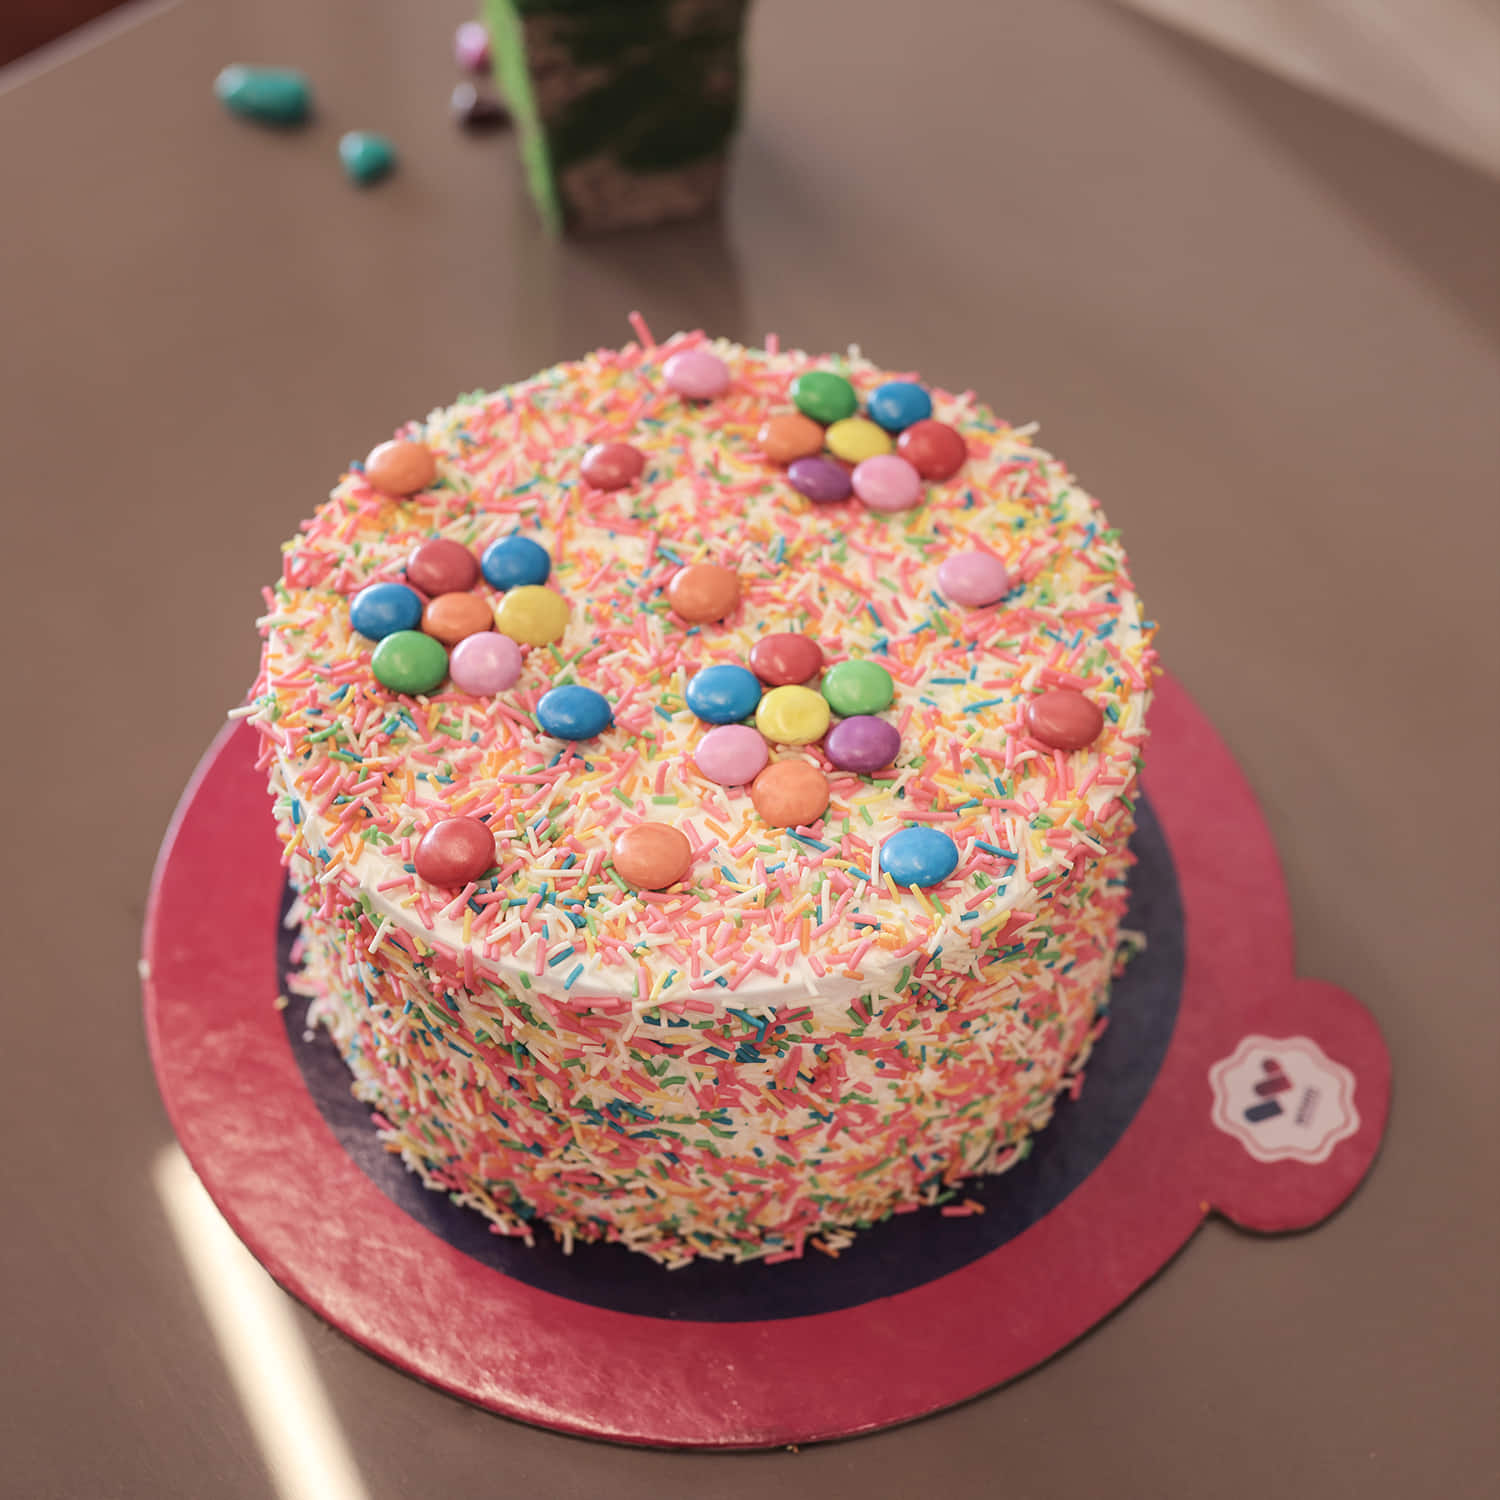 Chocolate Easter egg surprise cake | Bibbyskitchen recipes | Easter baking